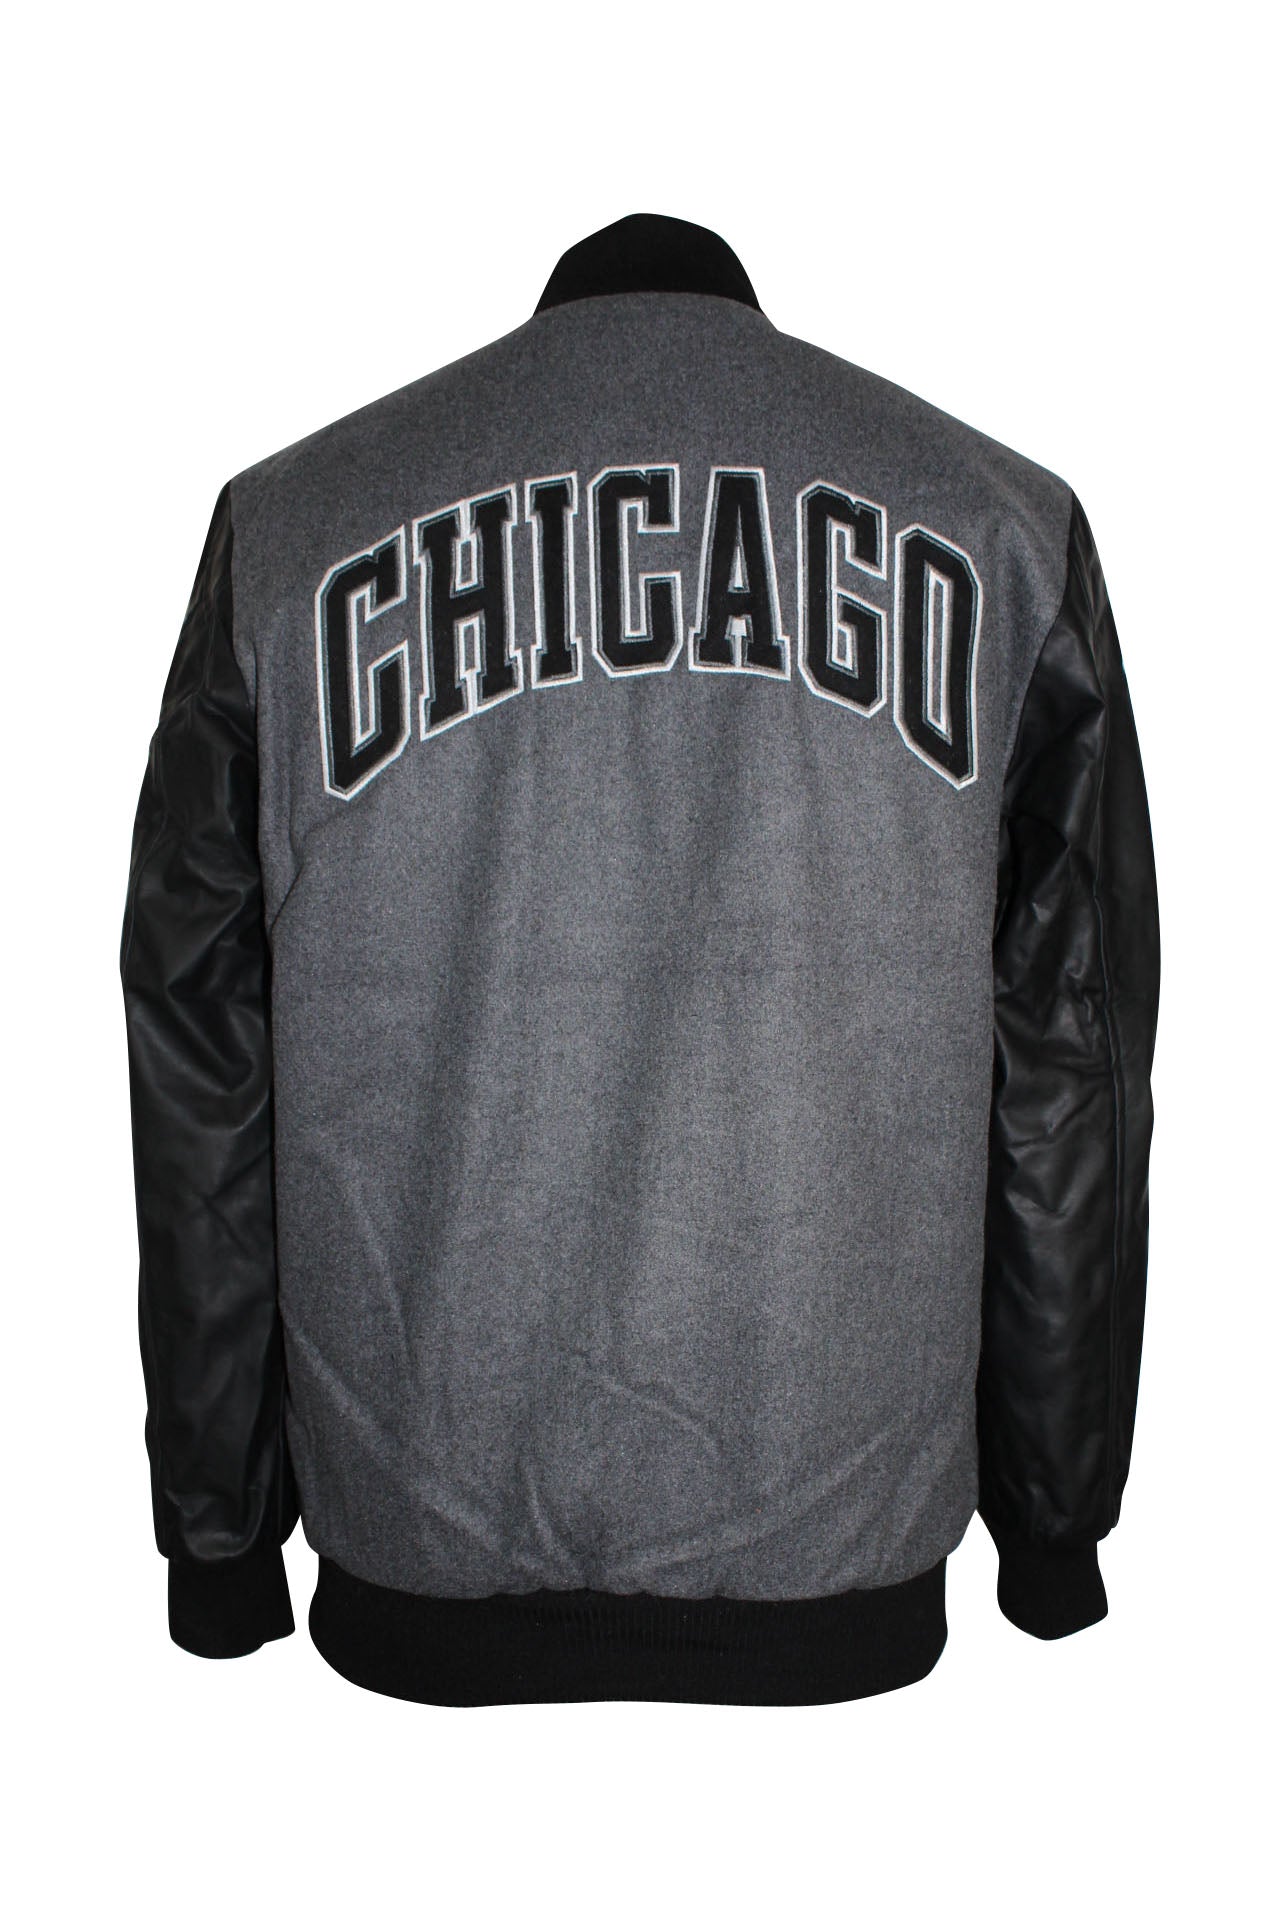 Chicago Bulls Full Leather Jacket - Black/Black Small